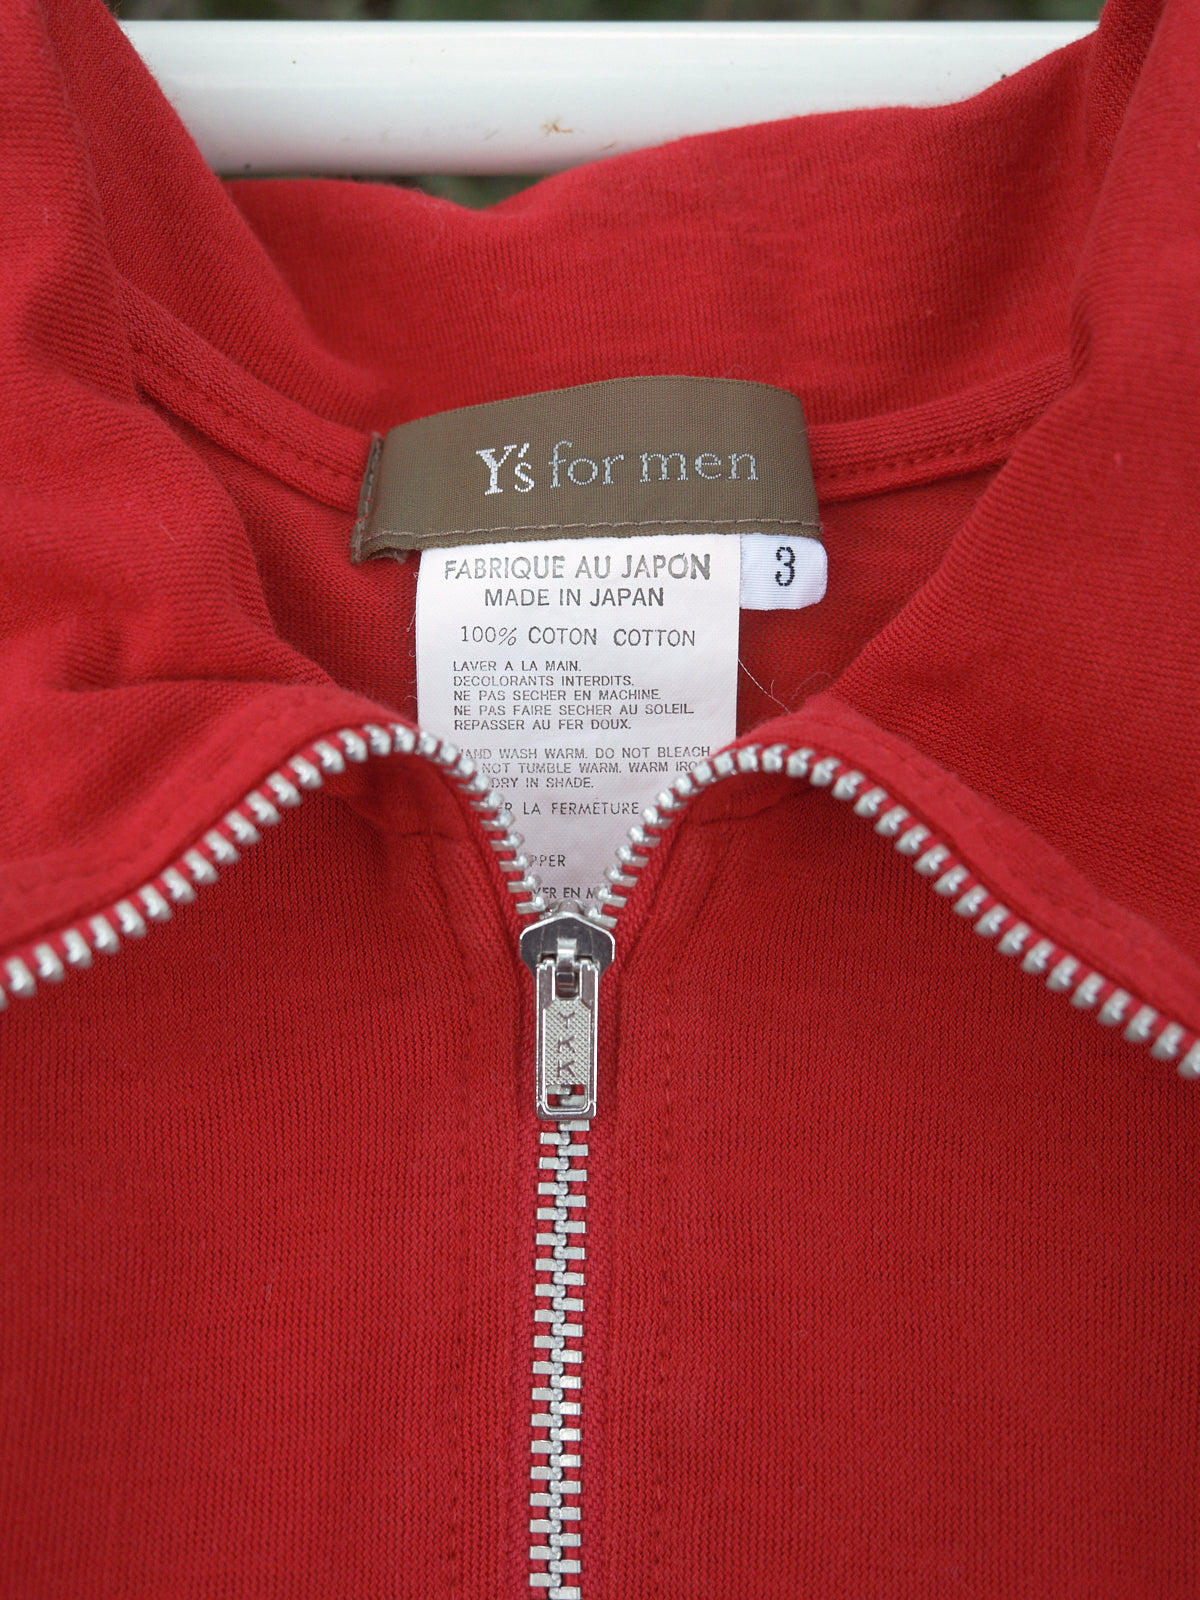 Y's for Men Yohji Yamamoto SS2001 red cotton zipped neck polo shirt - mens S M